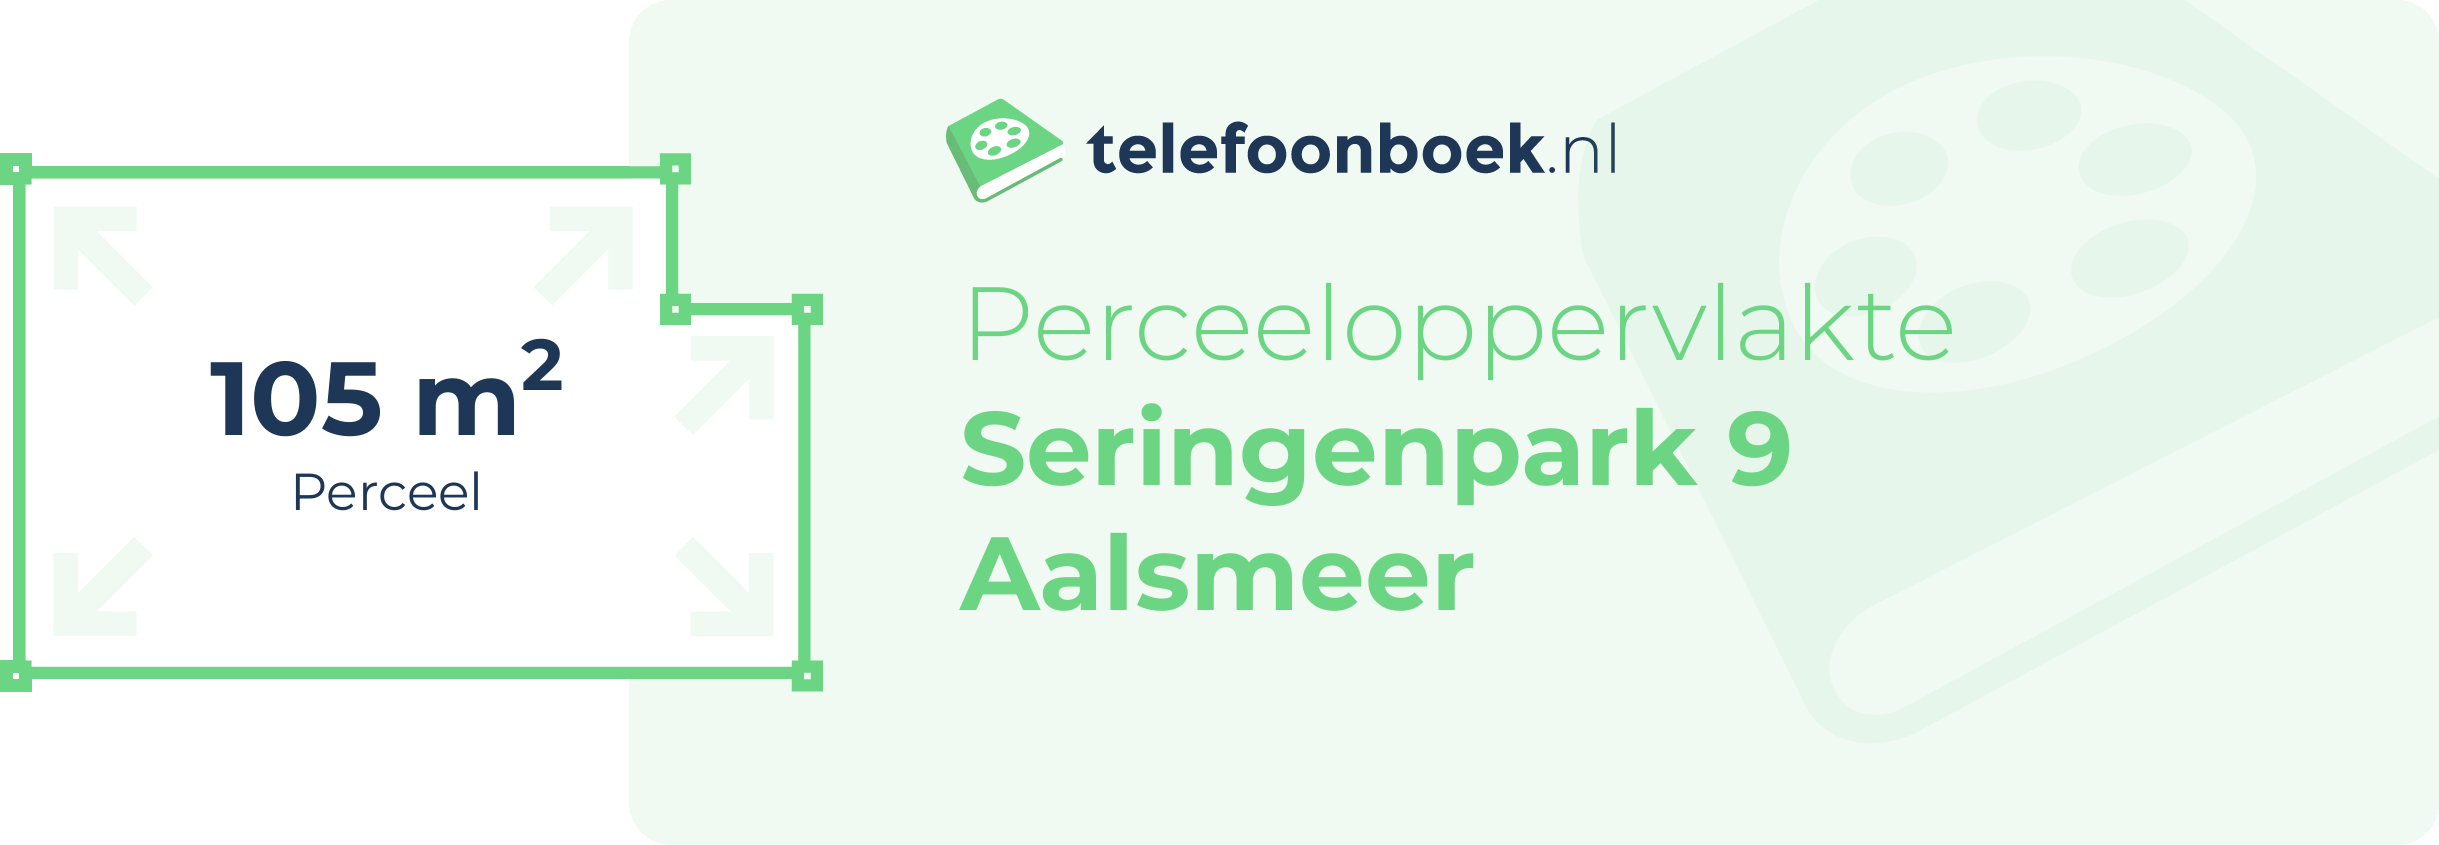 Perceeloppervlakte Seringenpark 9 Aalsmeer